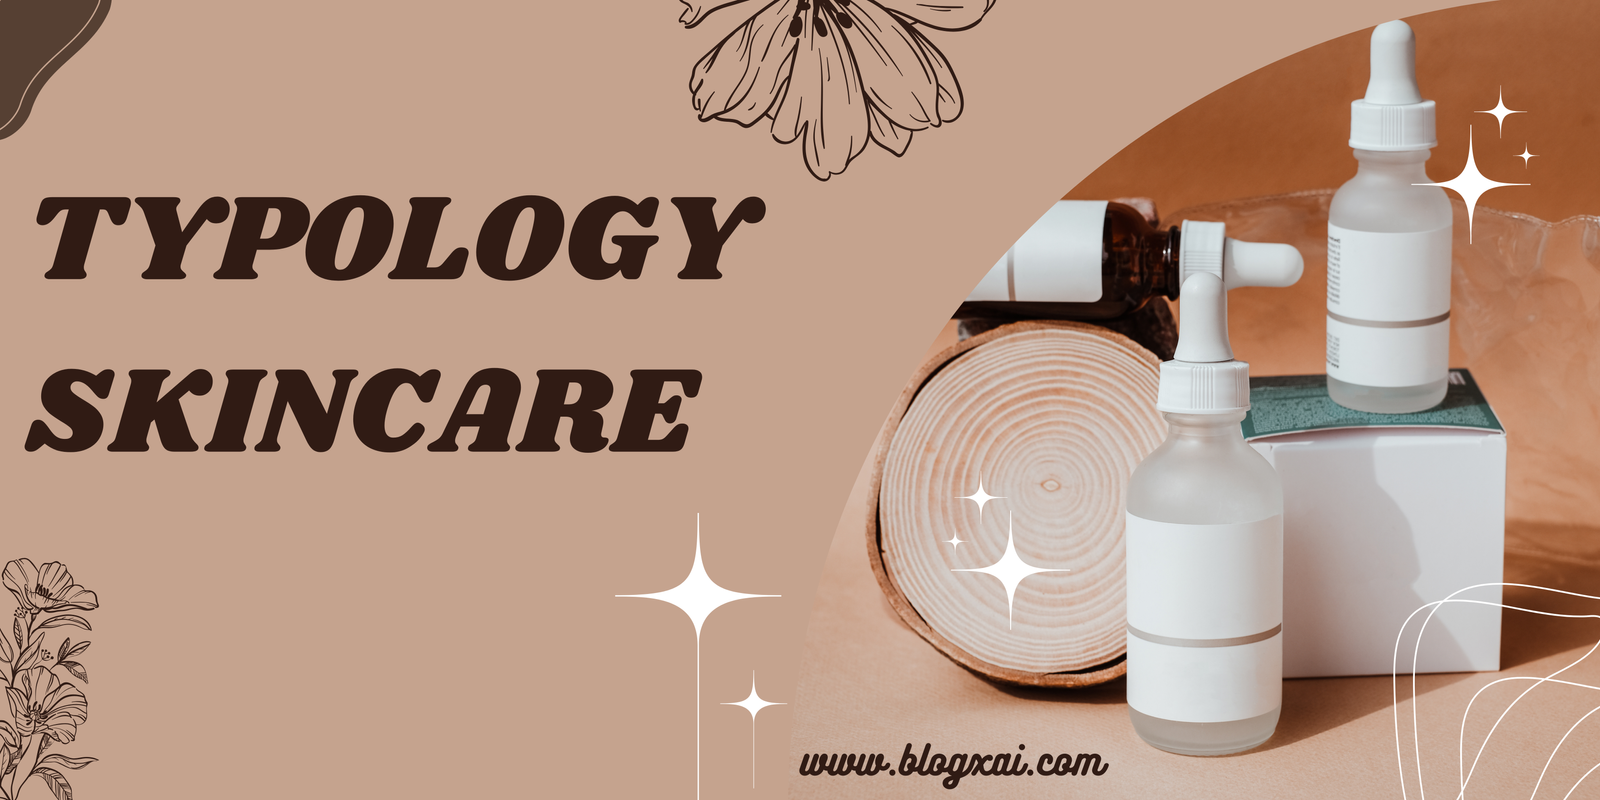 Typology Skincare